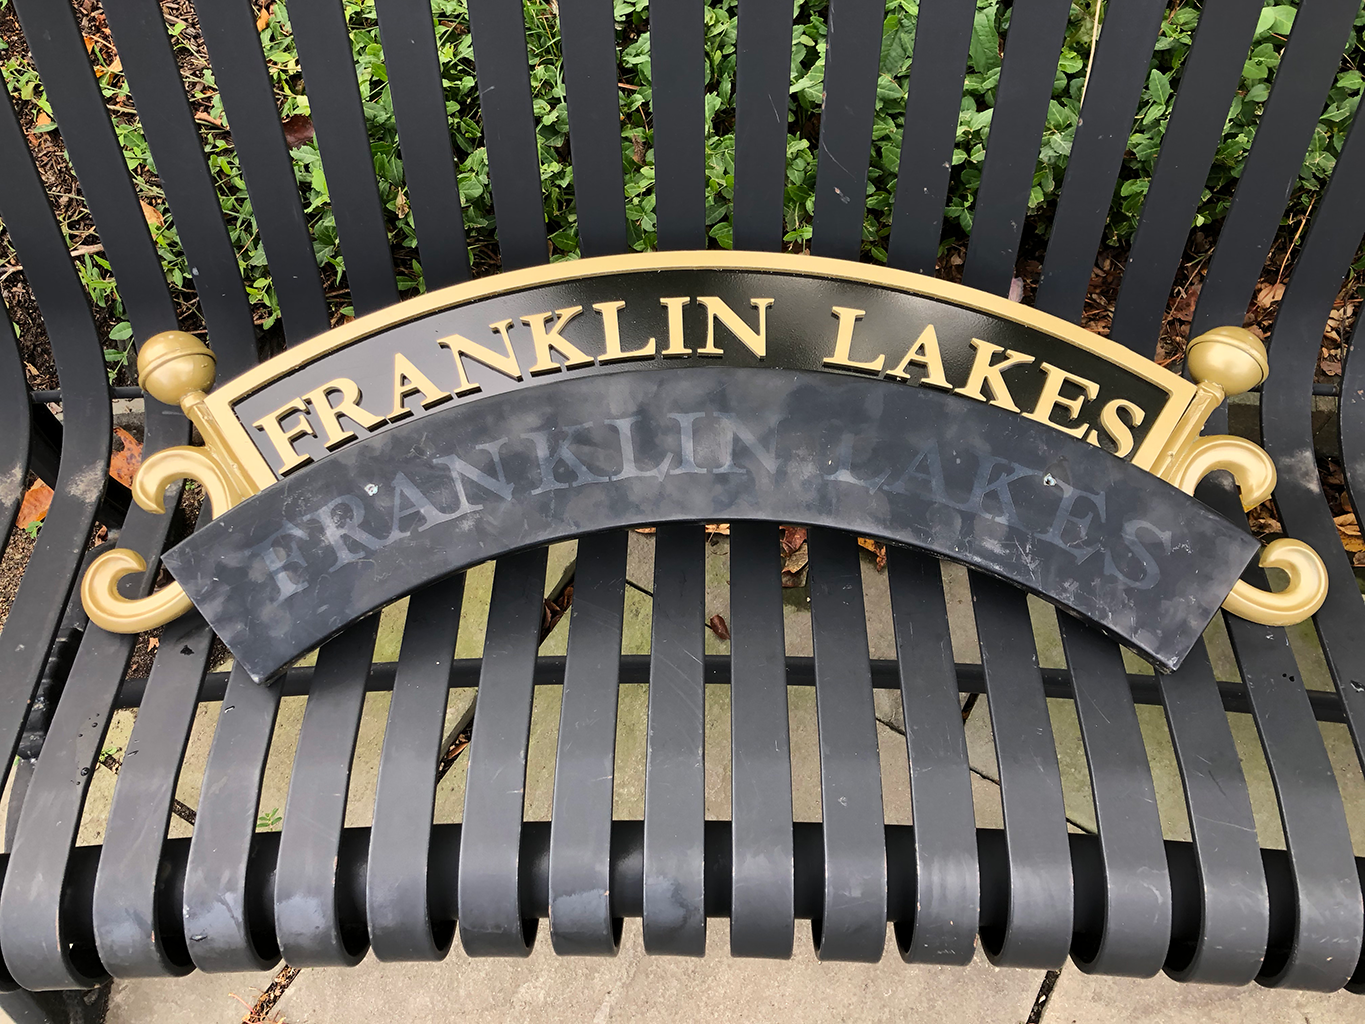 Franklin Lakes Street Clock Restored 2